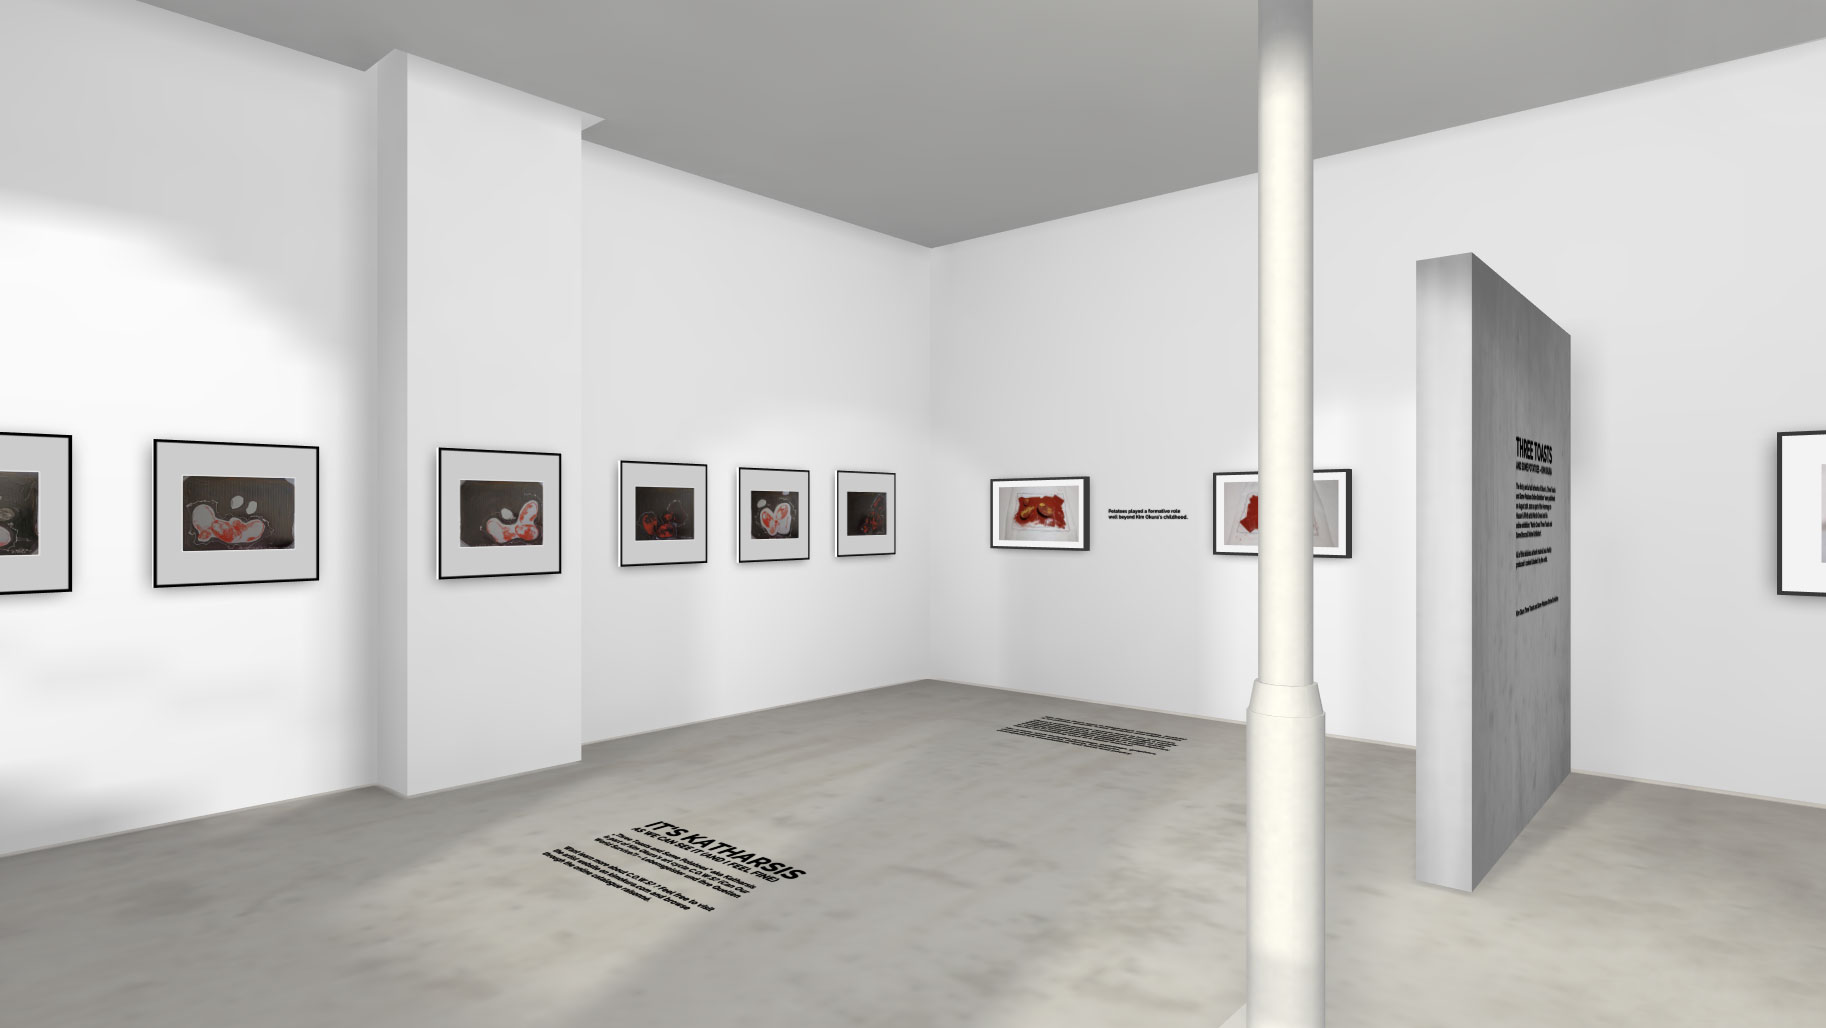 Gallery KIM OKURA exhibition view